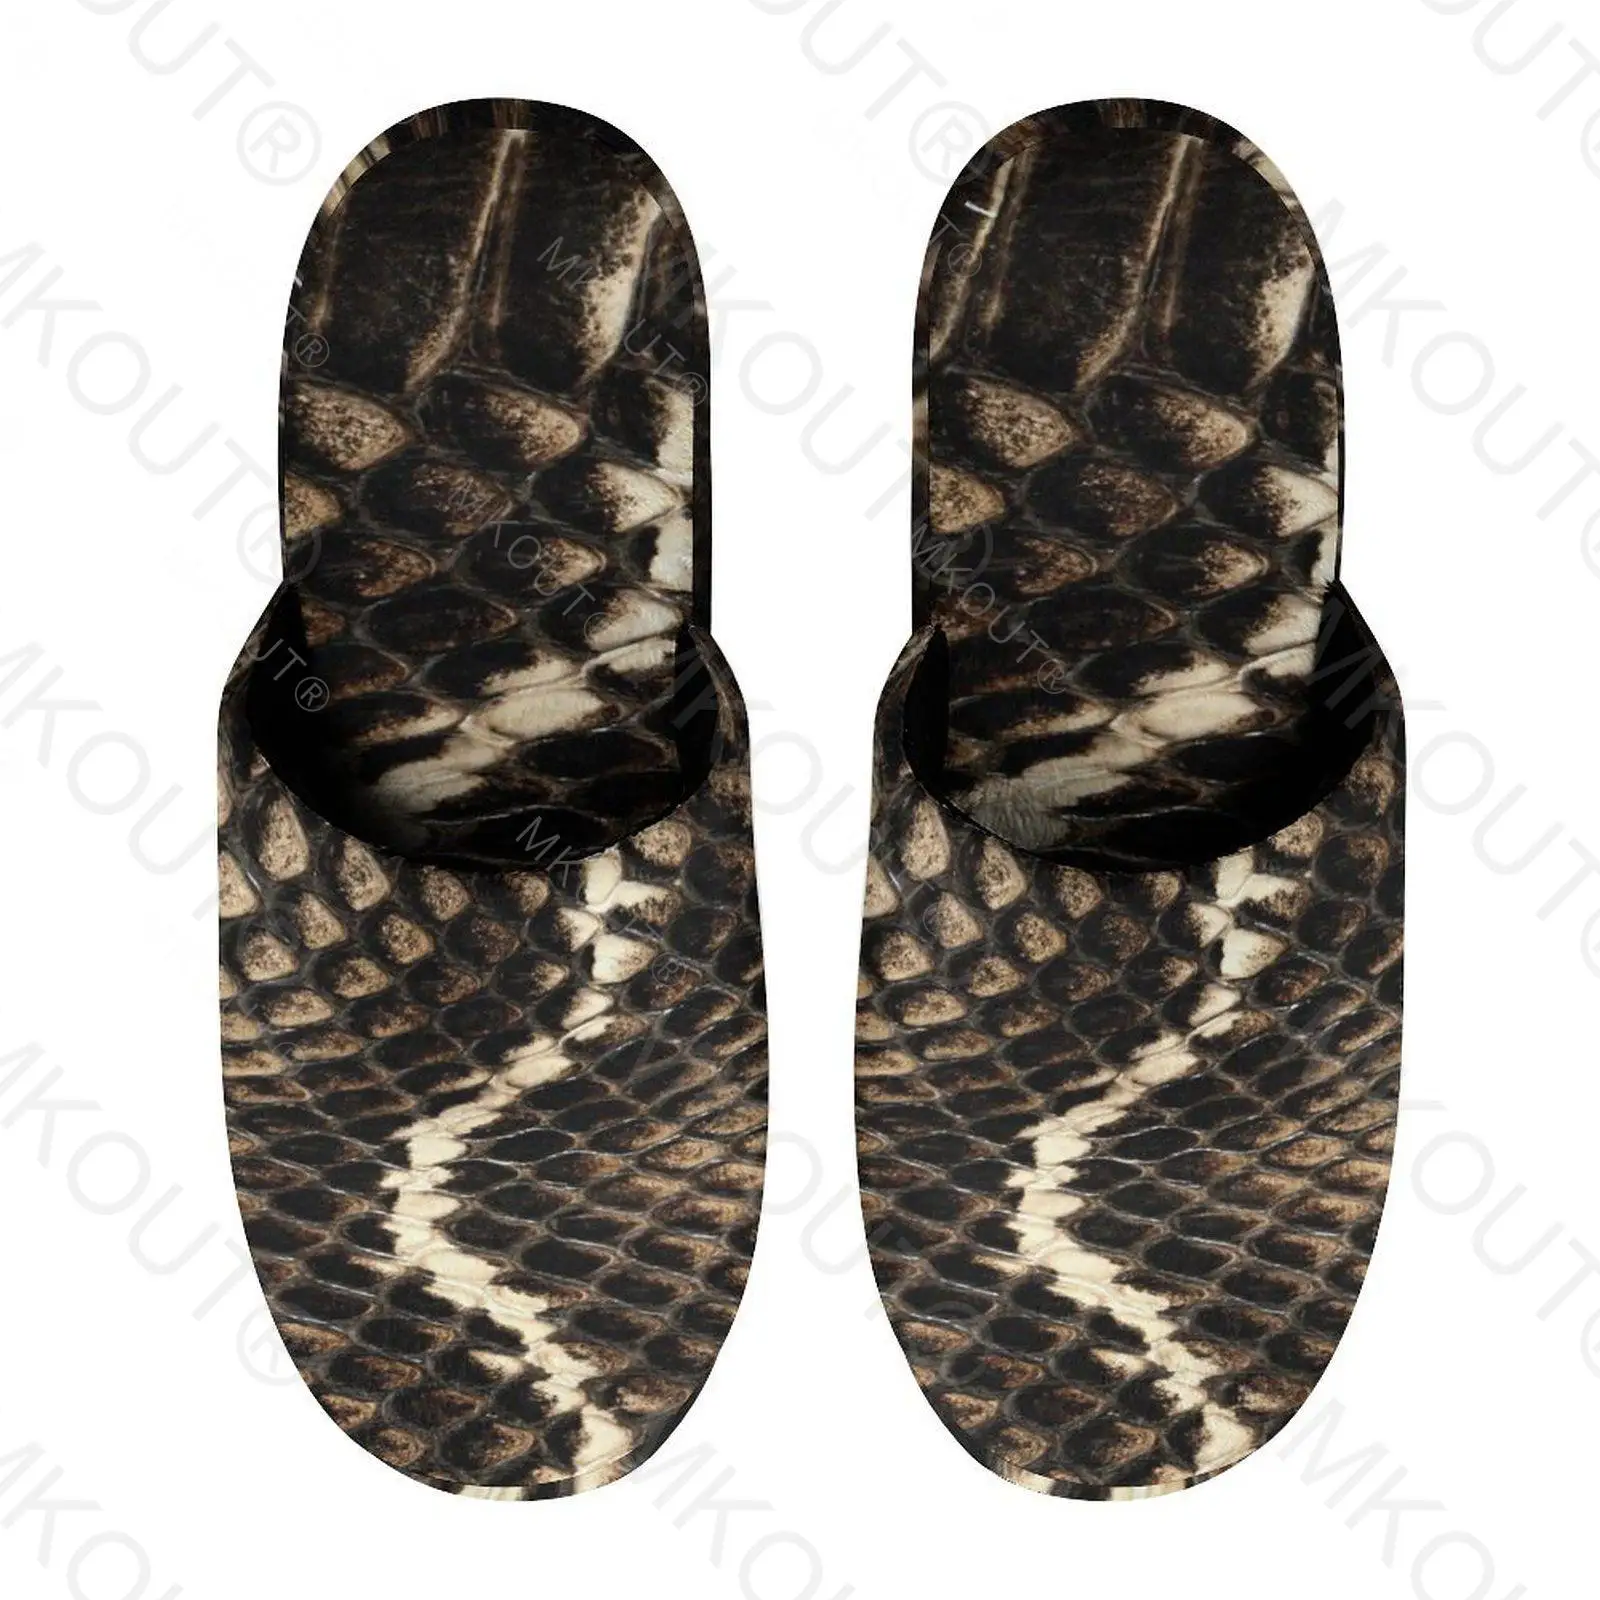 

Snake Skin Scales Snakeskin (3) Warm Cotton Slippers For Men Women Thick Soft Soled Non-Slip Fluffy Shoes Indoor House Slipper